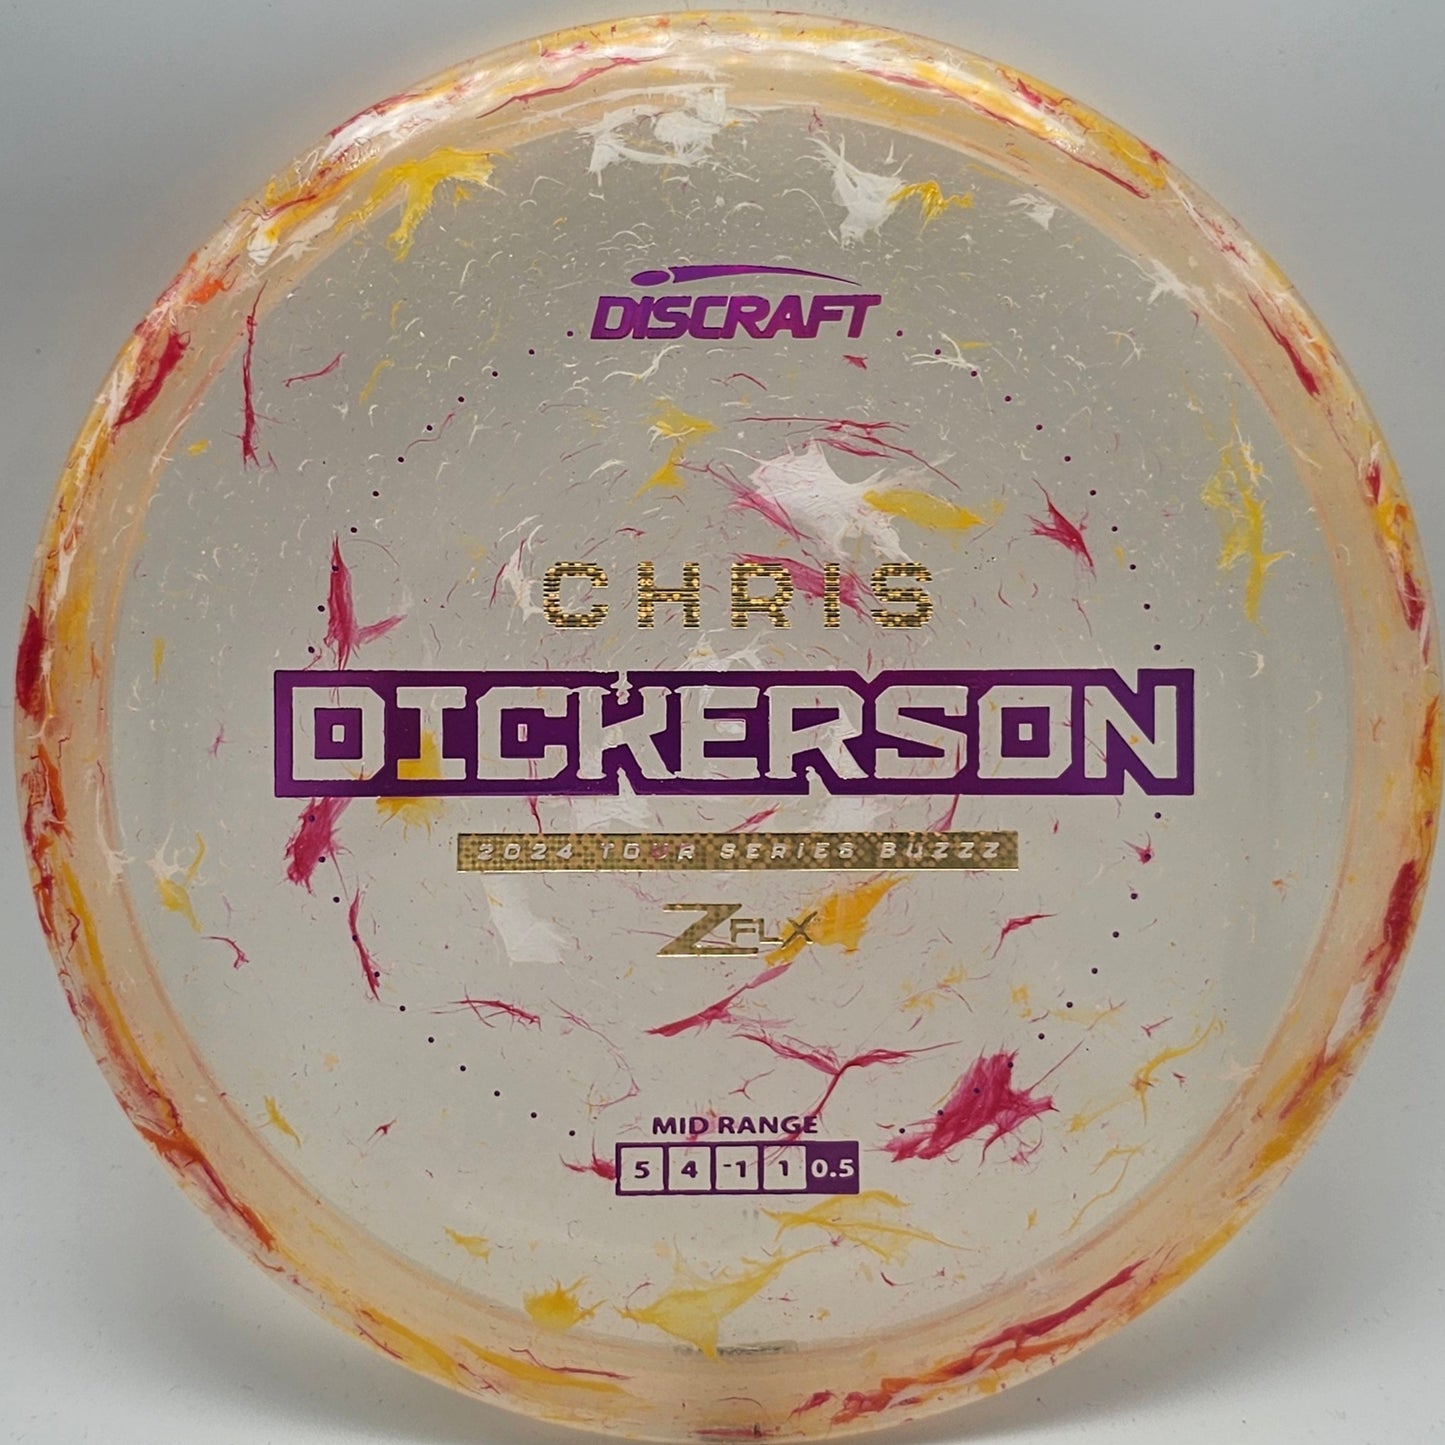 Discraft Chris Dickerson Buzzz - Tour Series 2024